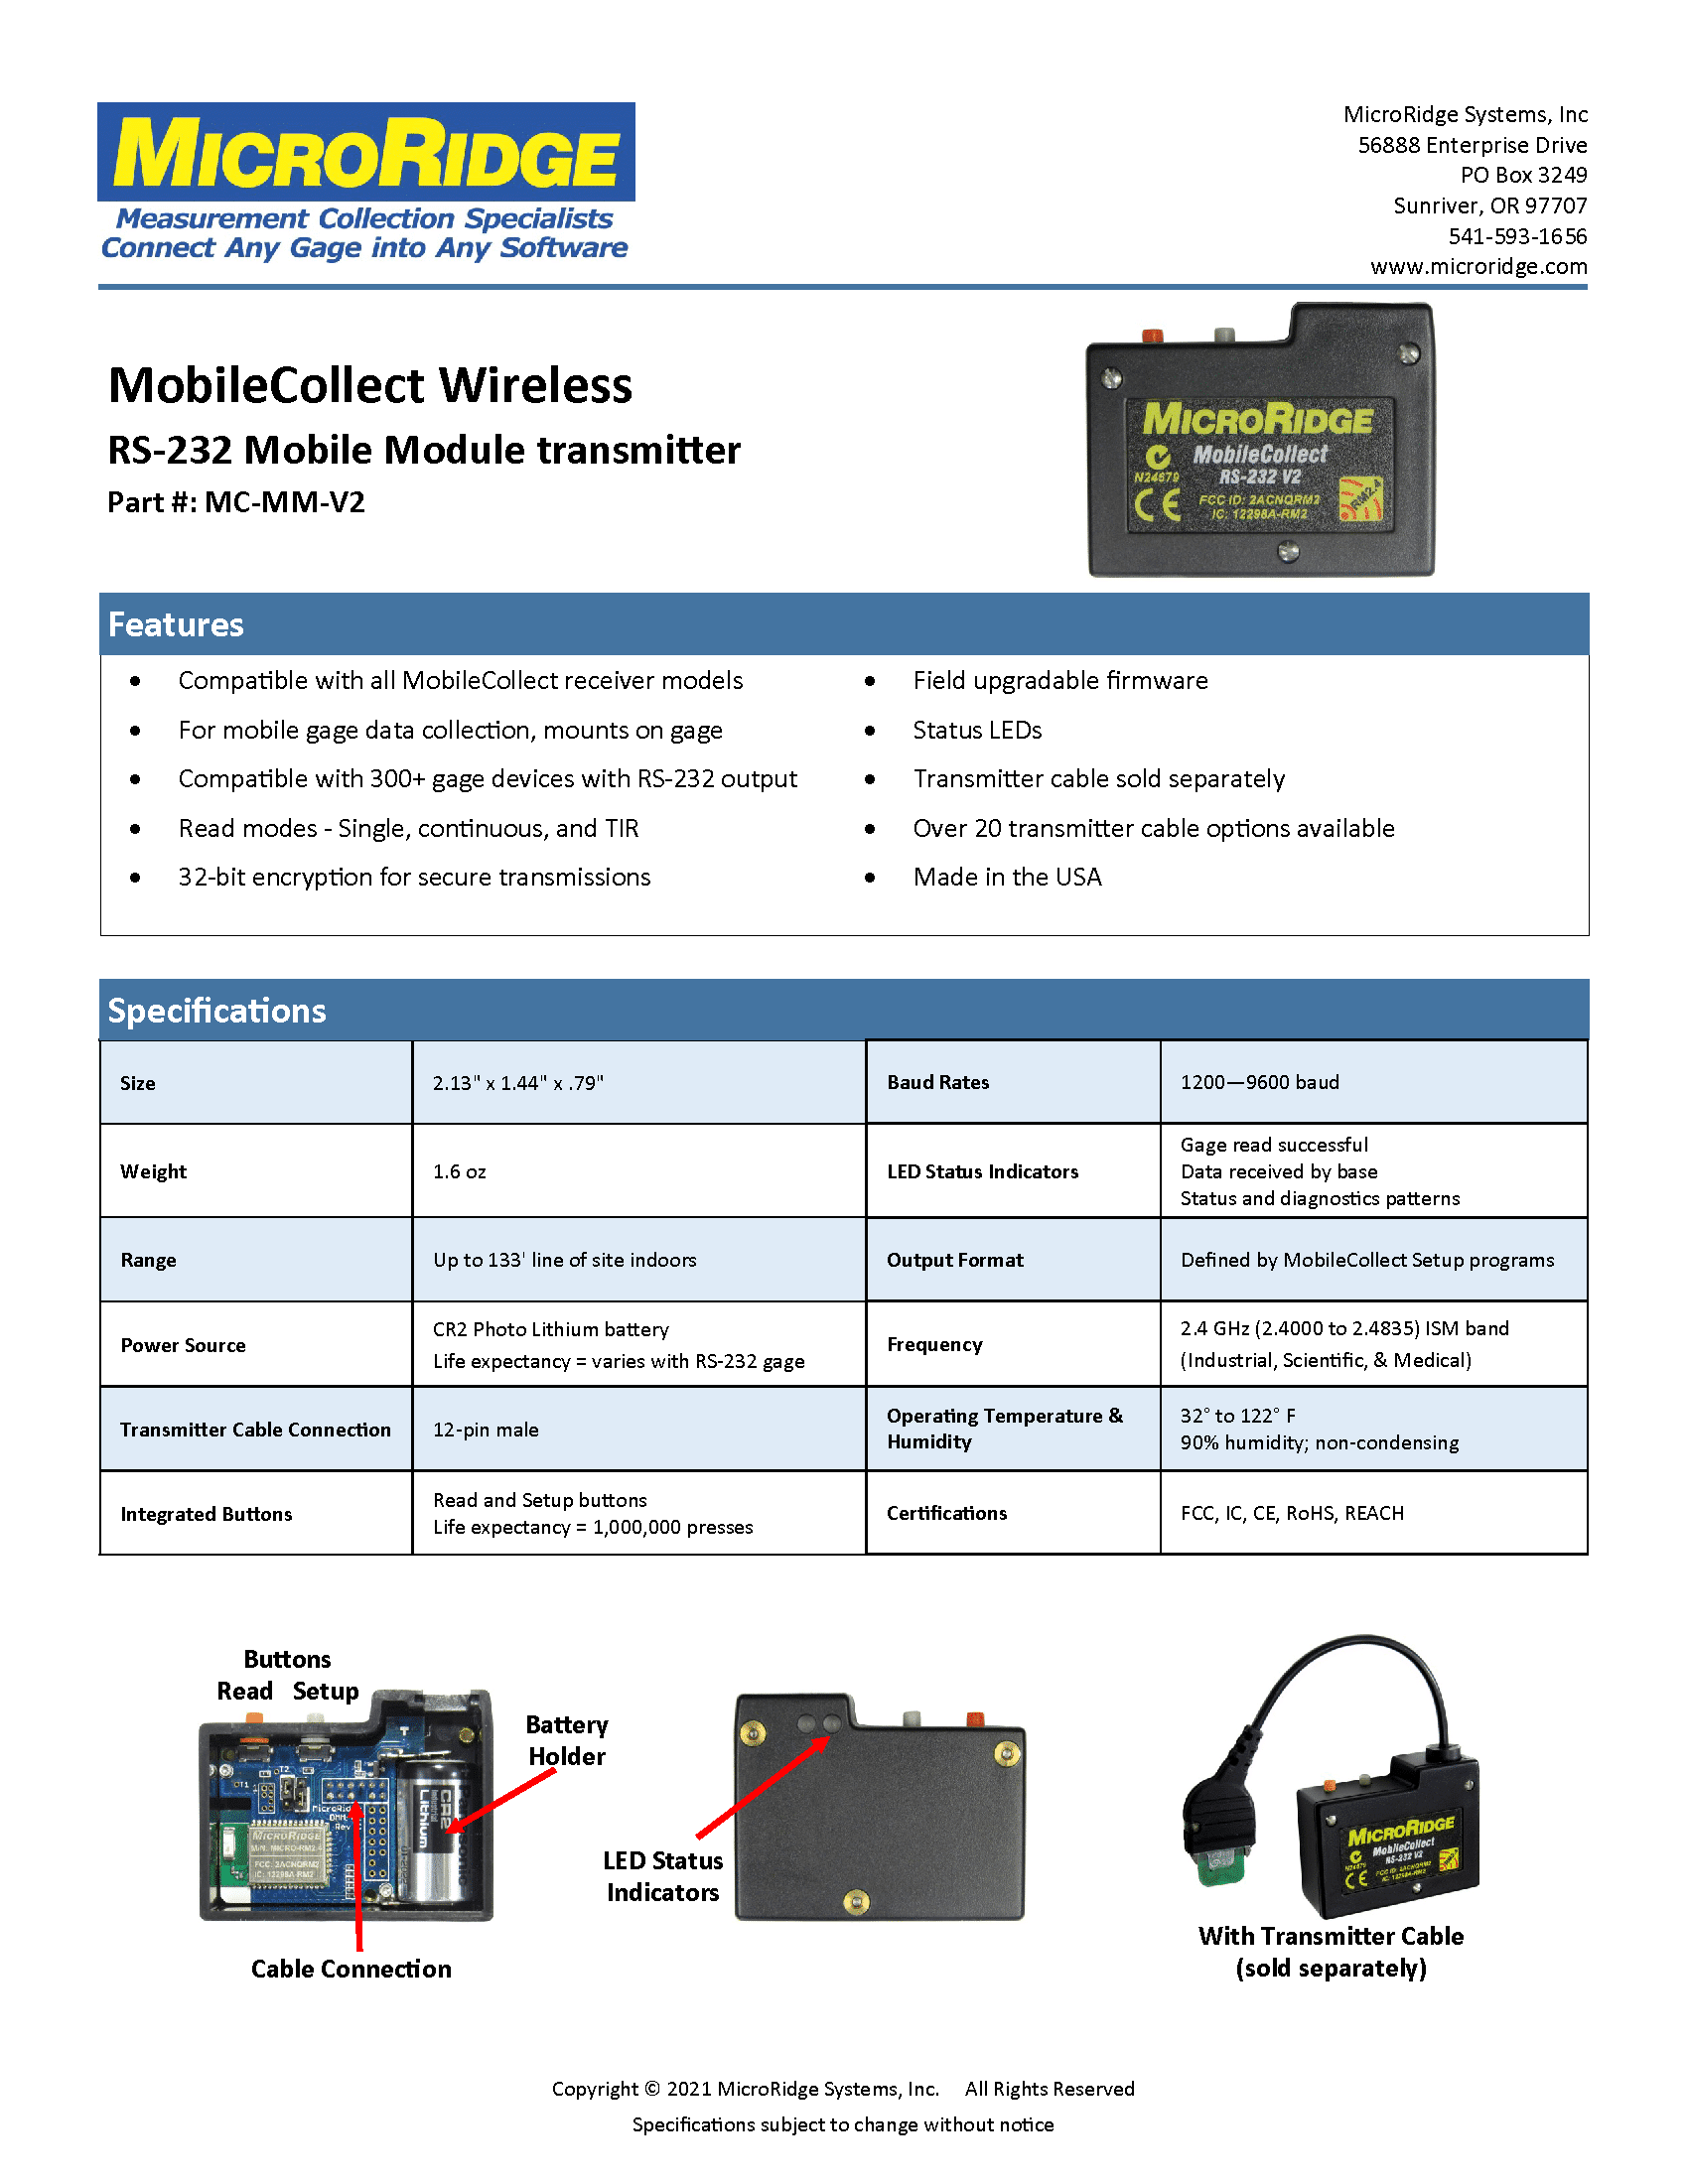 RS-232 Mobile Module Spec Sheet